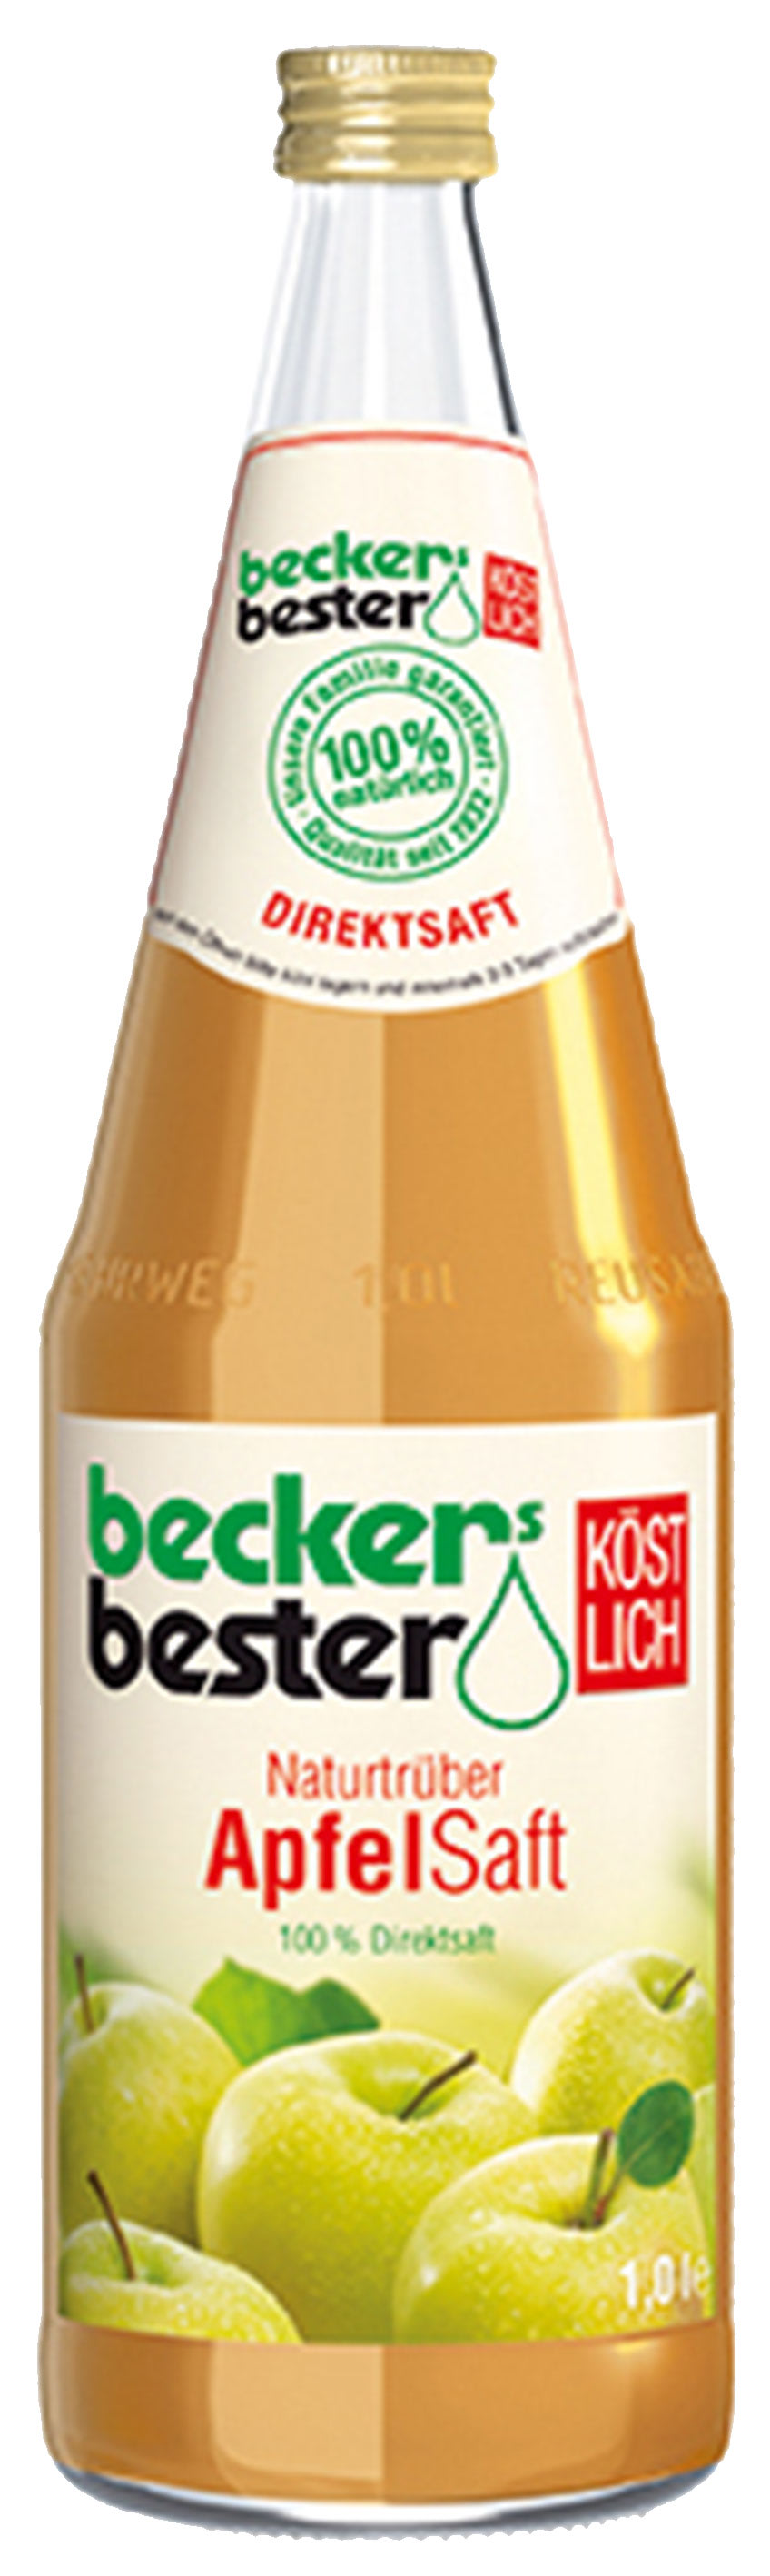 Beckers Bester Apfelsaft naturtrüb Direktsaft Kasten 6 x 1 l Glas Mehrweg